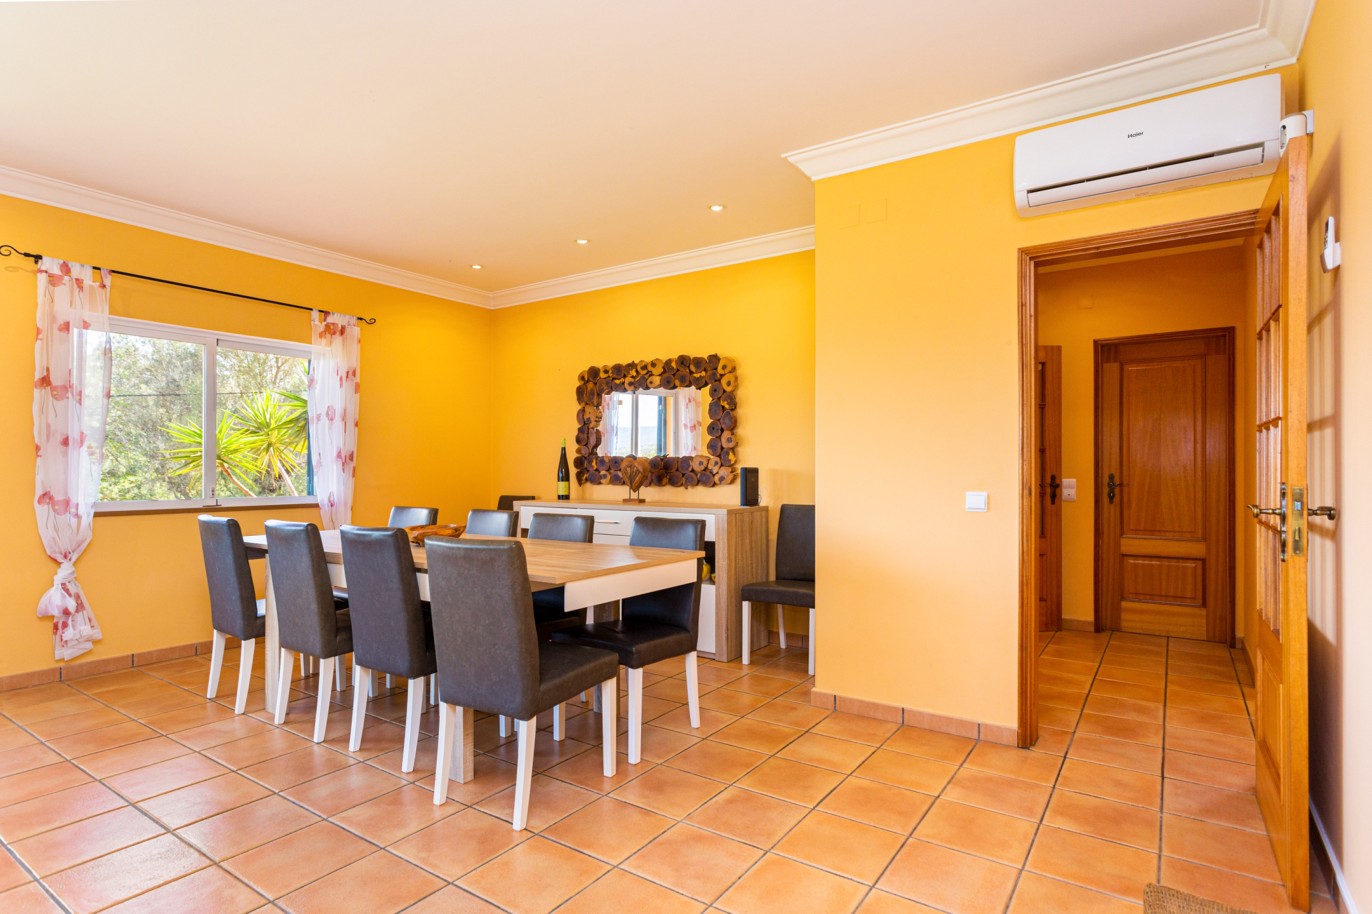 5 Bedroom Villa with 2 Bedroom Annex, for sale, in Alvor, Algarve_220965